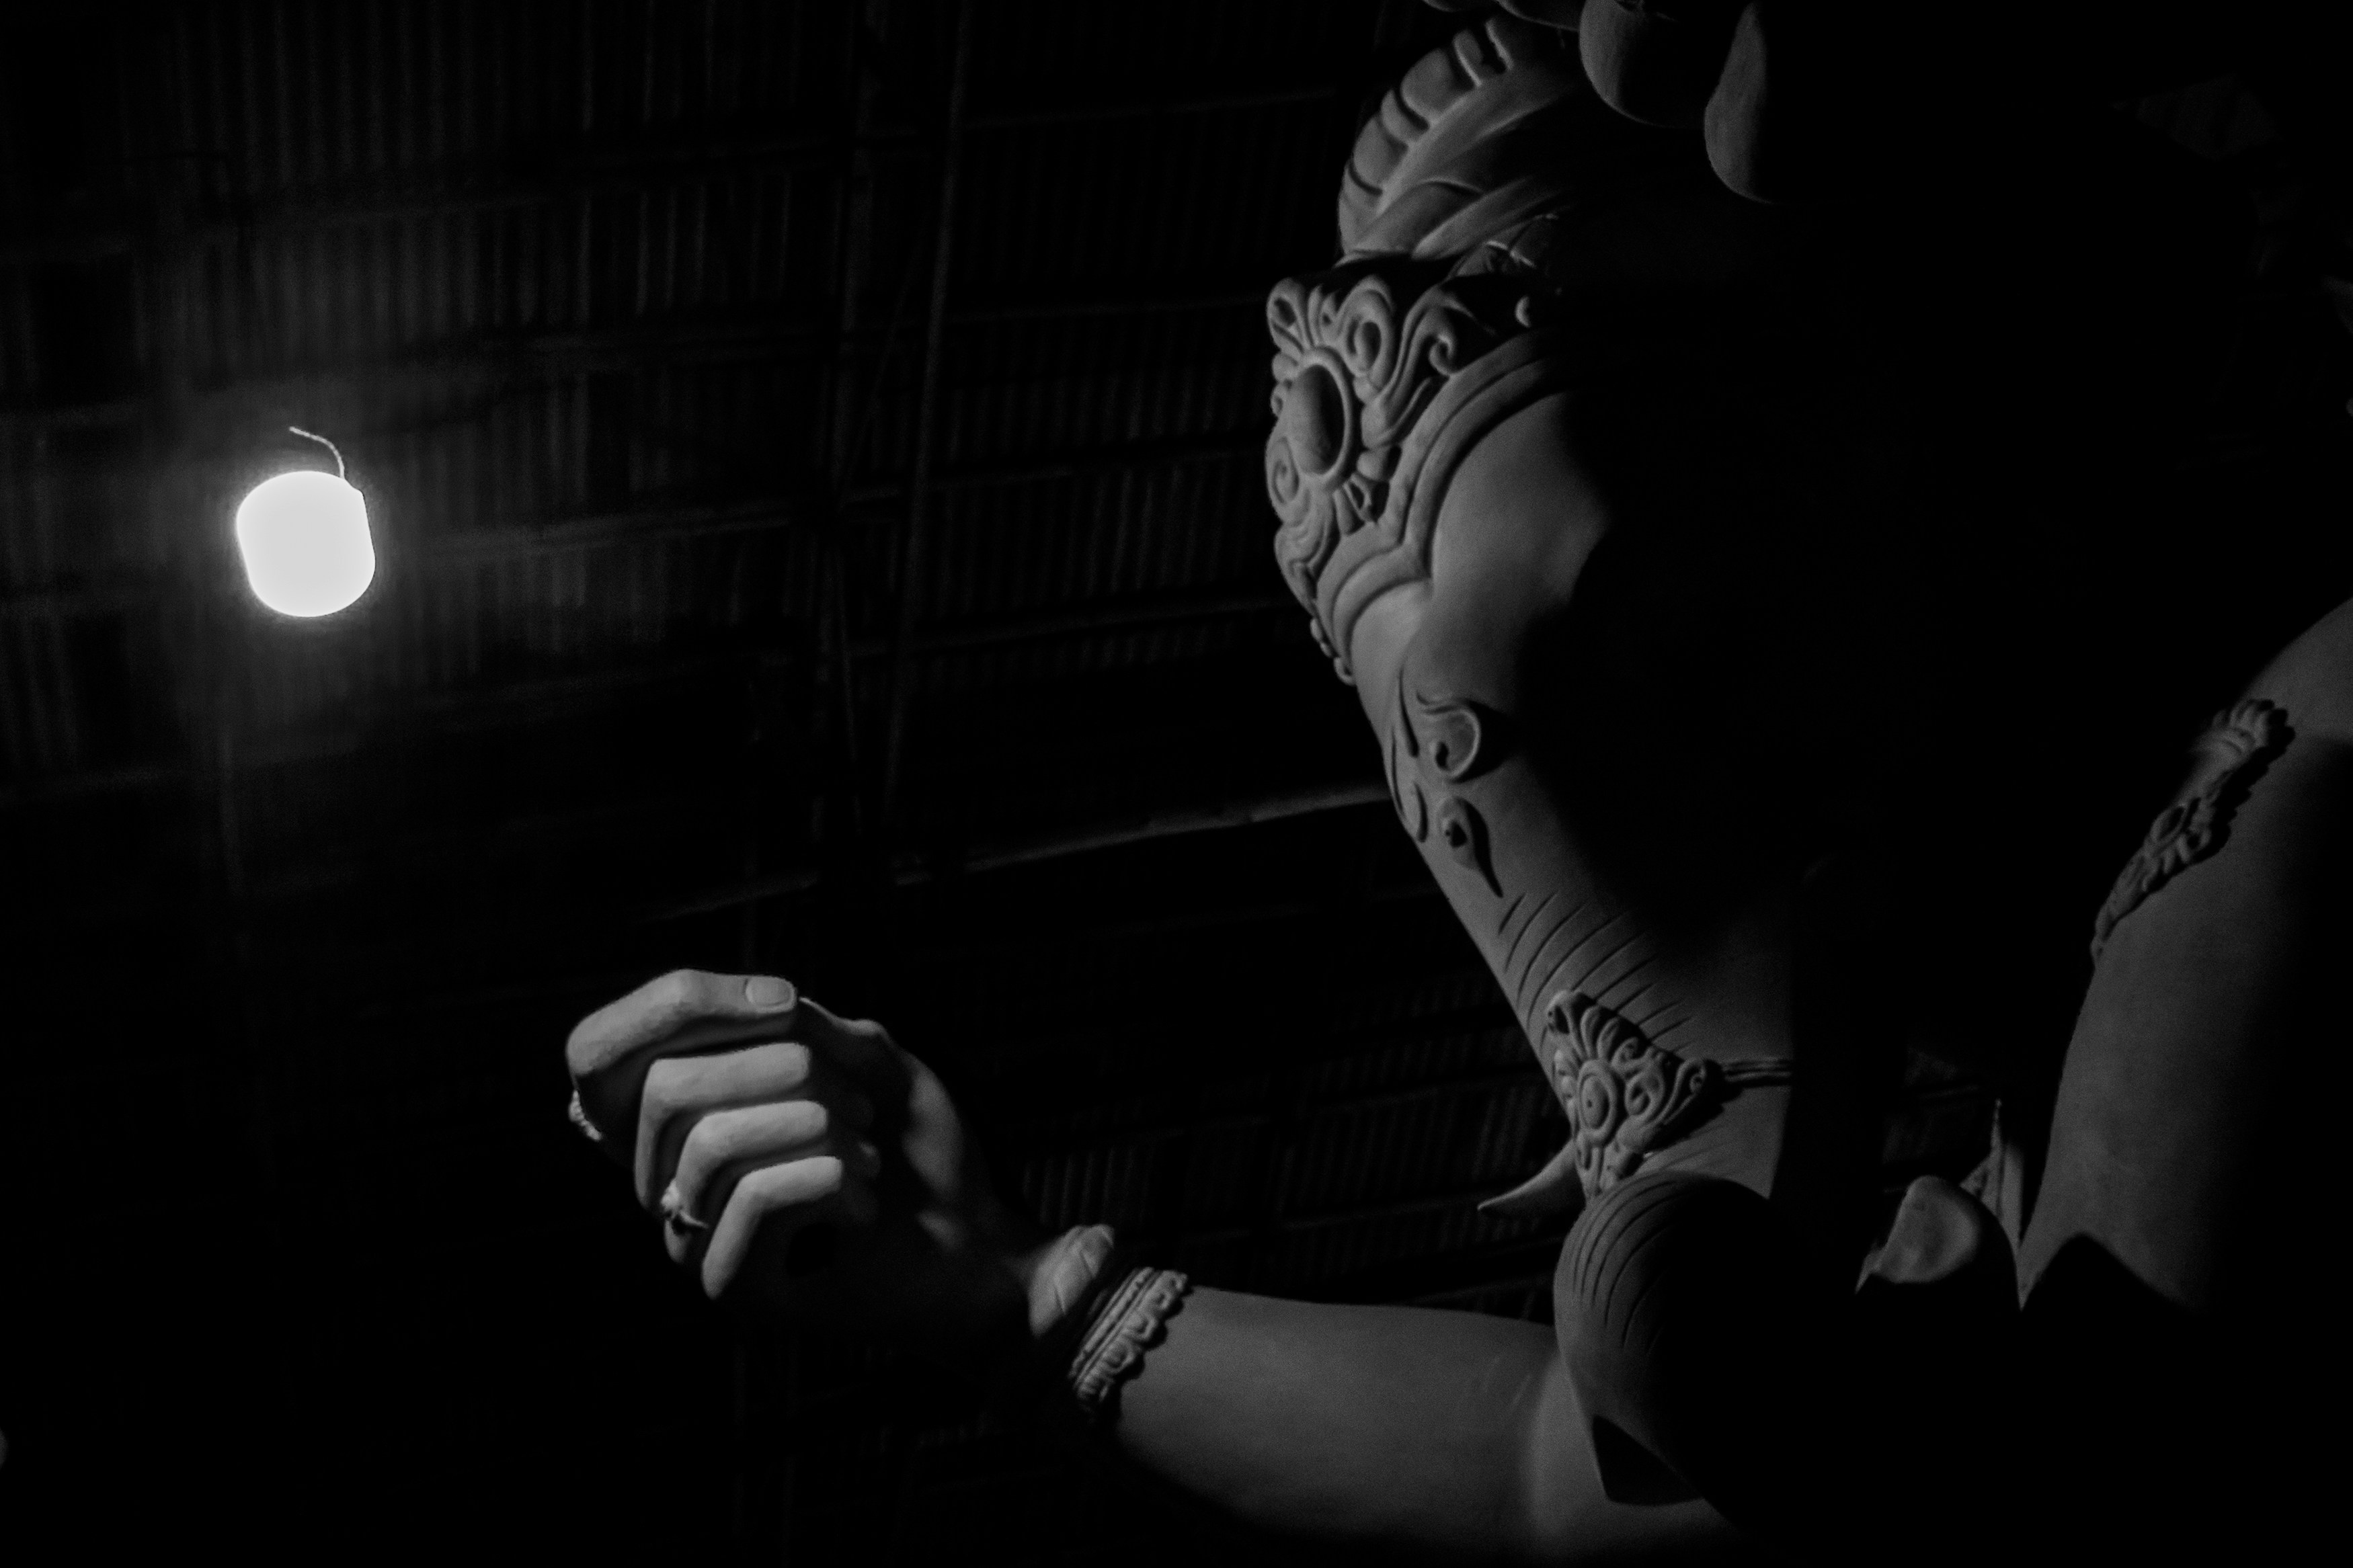 A beautiful idol of Lord Ganesha on display at a workshop in Mumbai